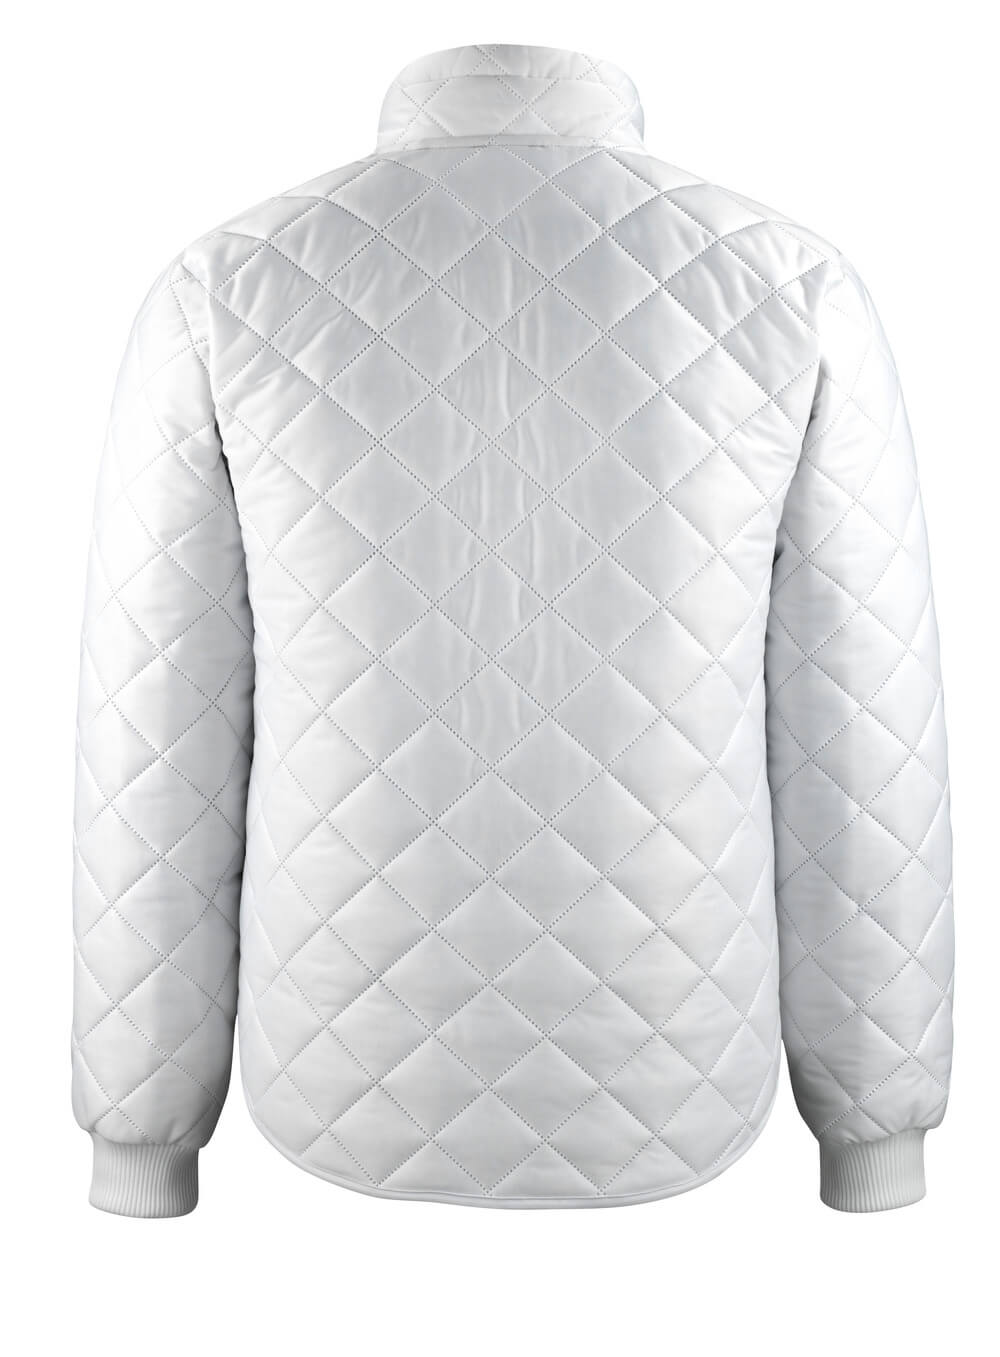 Mascot ORIGINALS  Whitby Thermal jacket 14528 white